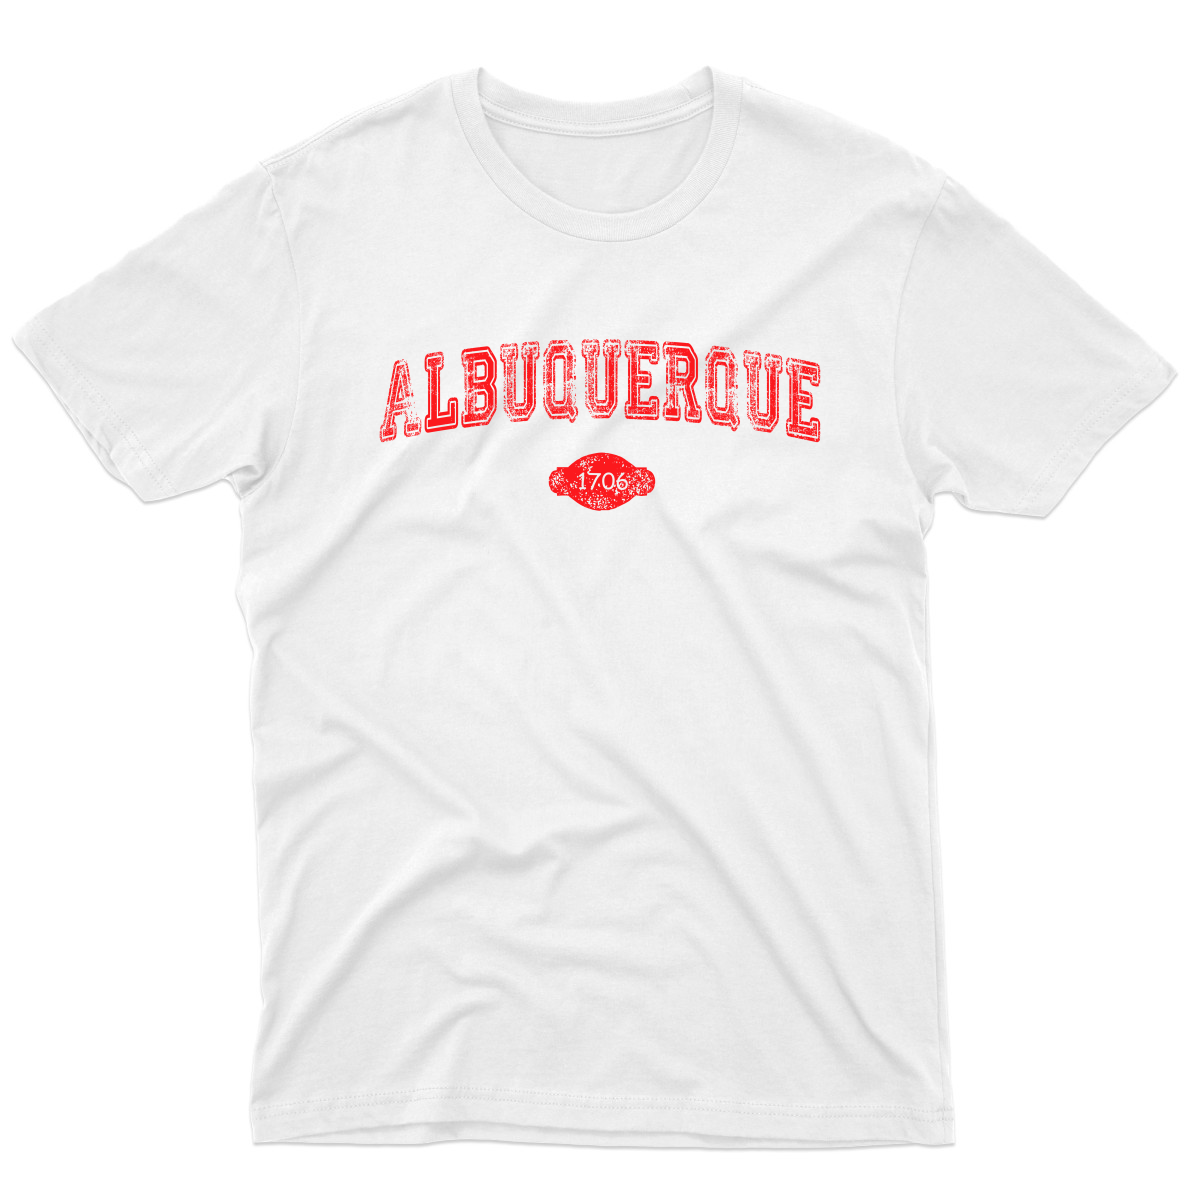 Albuquerque 1706 Represent Men's T-shirt | White